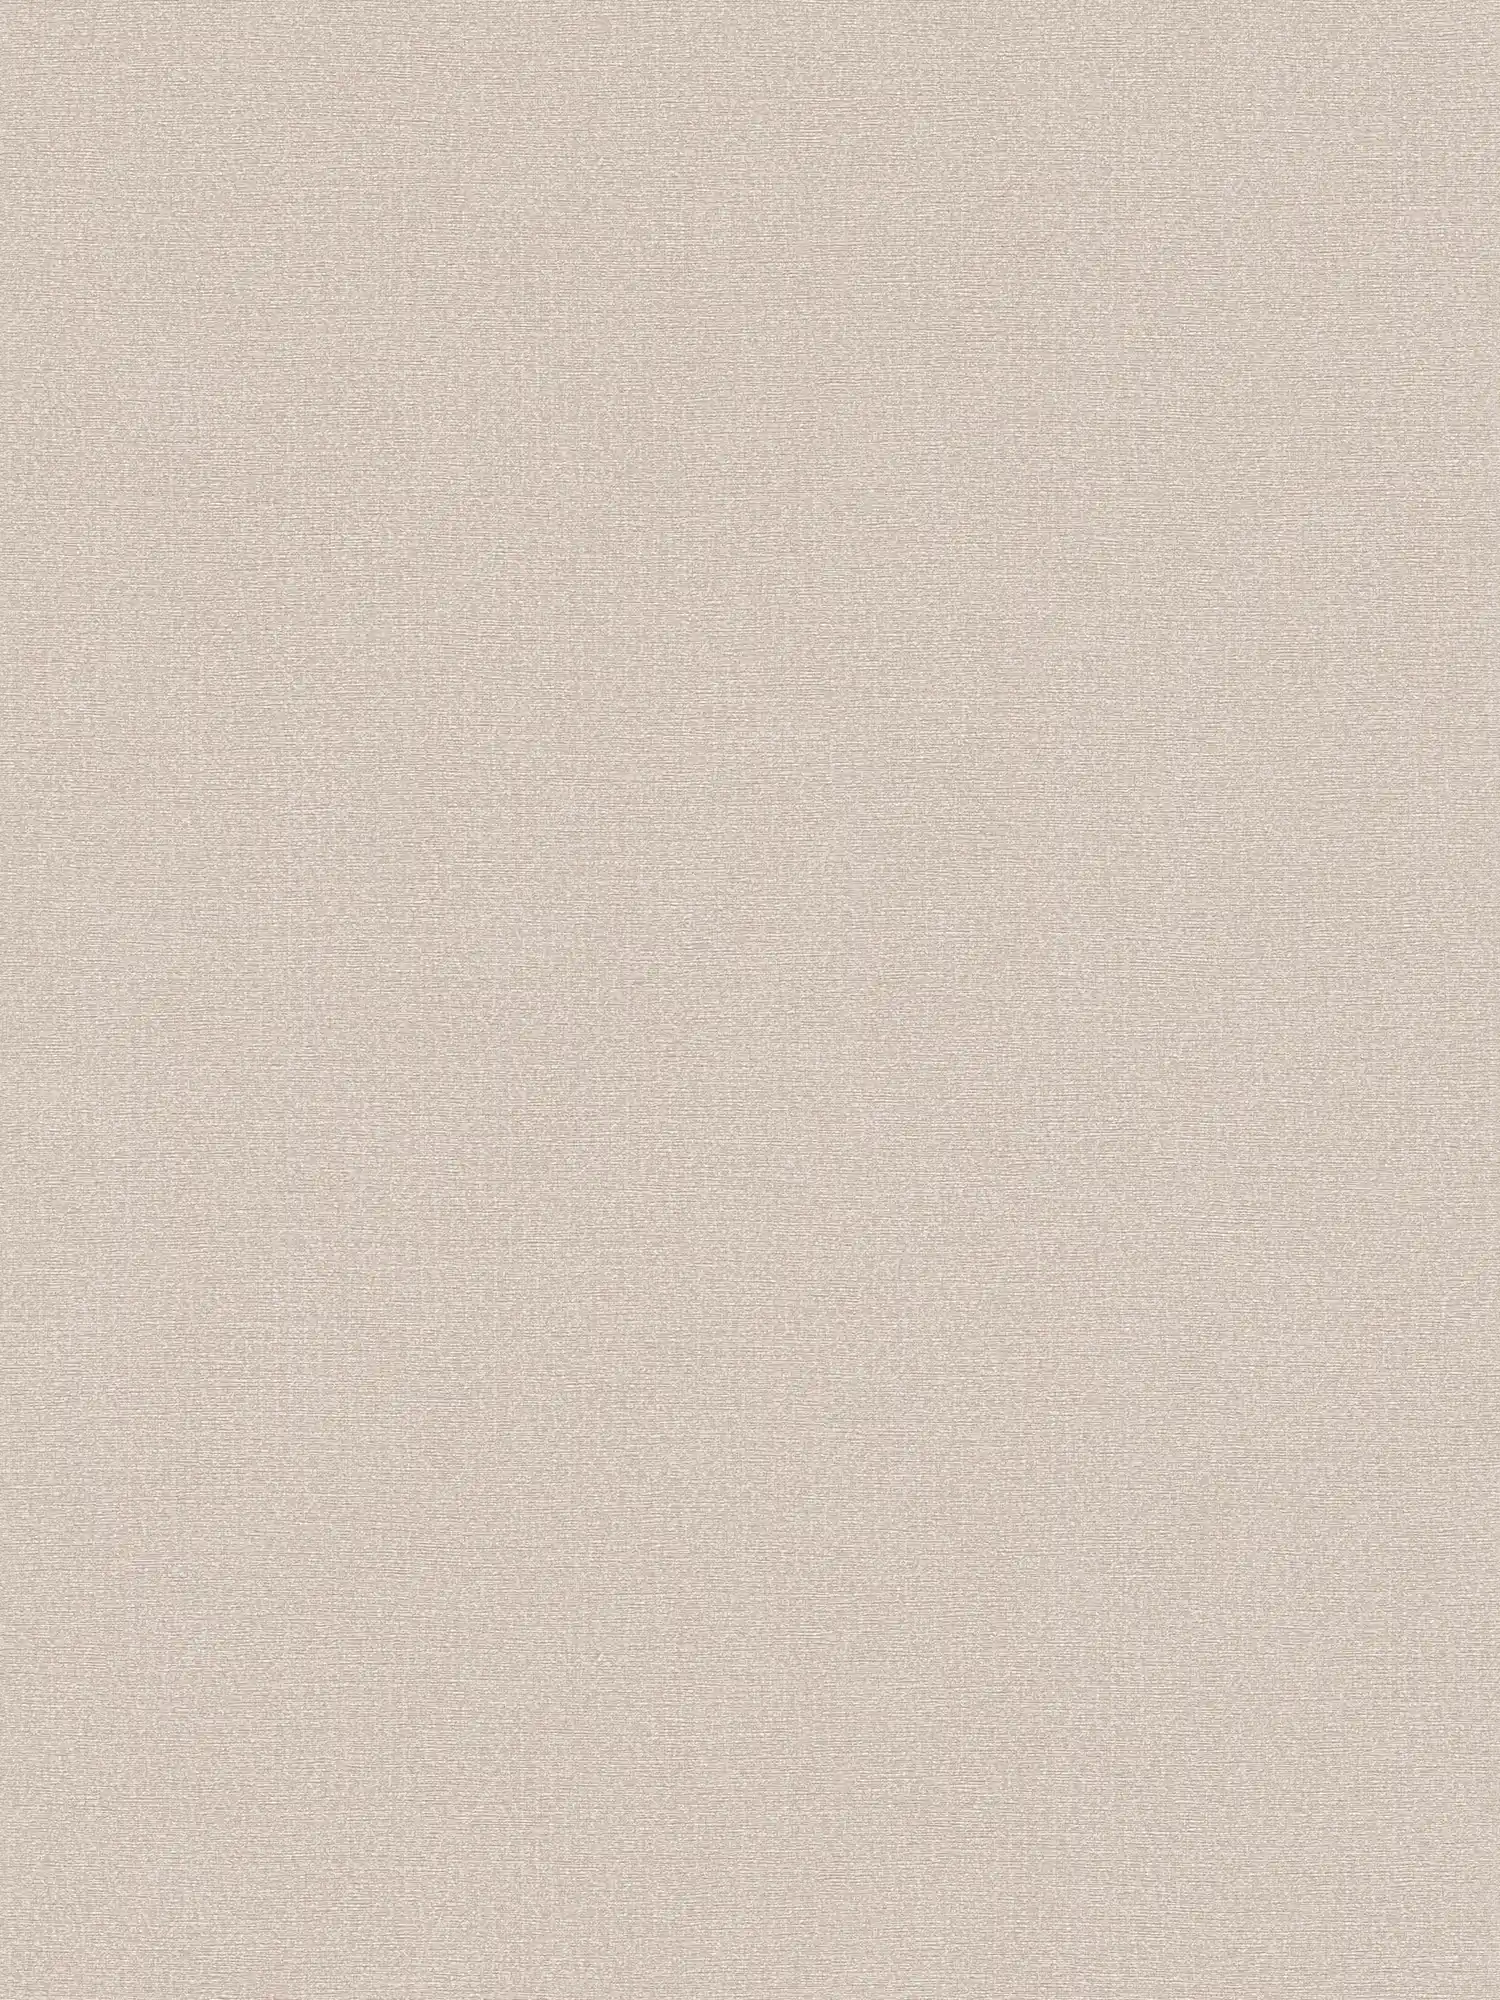 Non-woven wallpaper with polka dot pattern & gloss effect PVC-free - Beige, Grey
